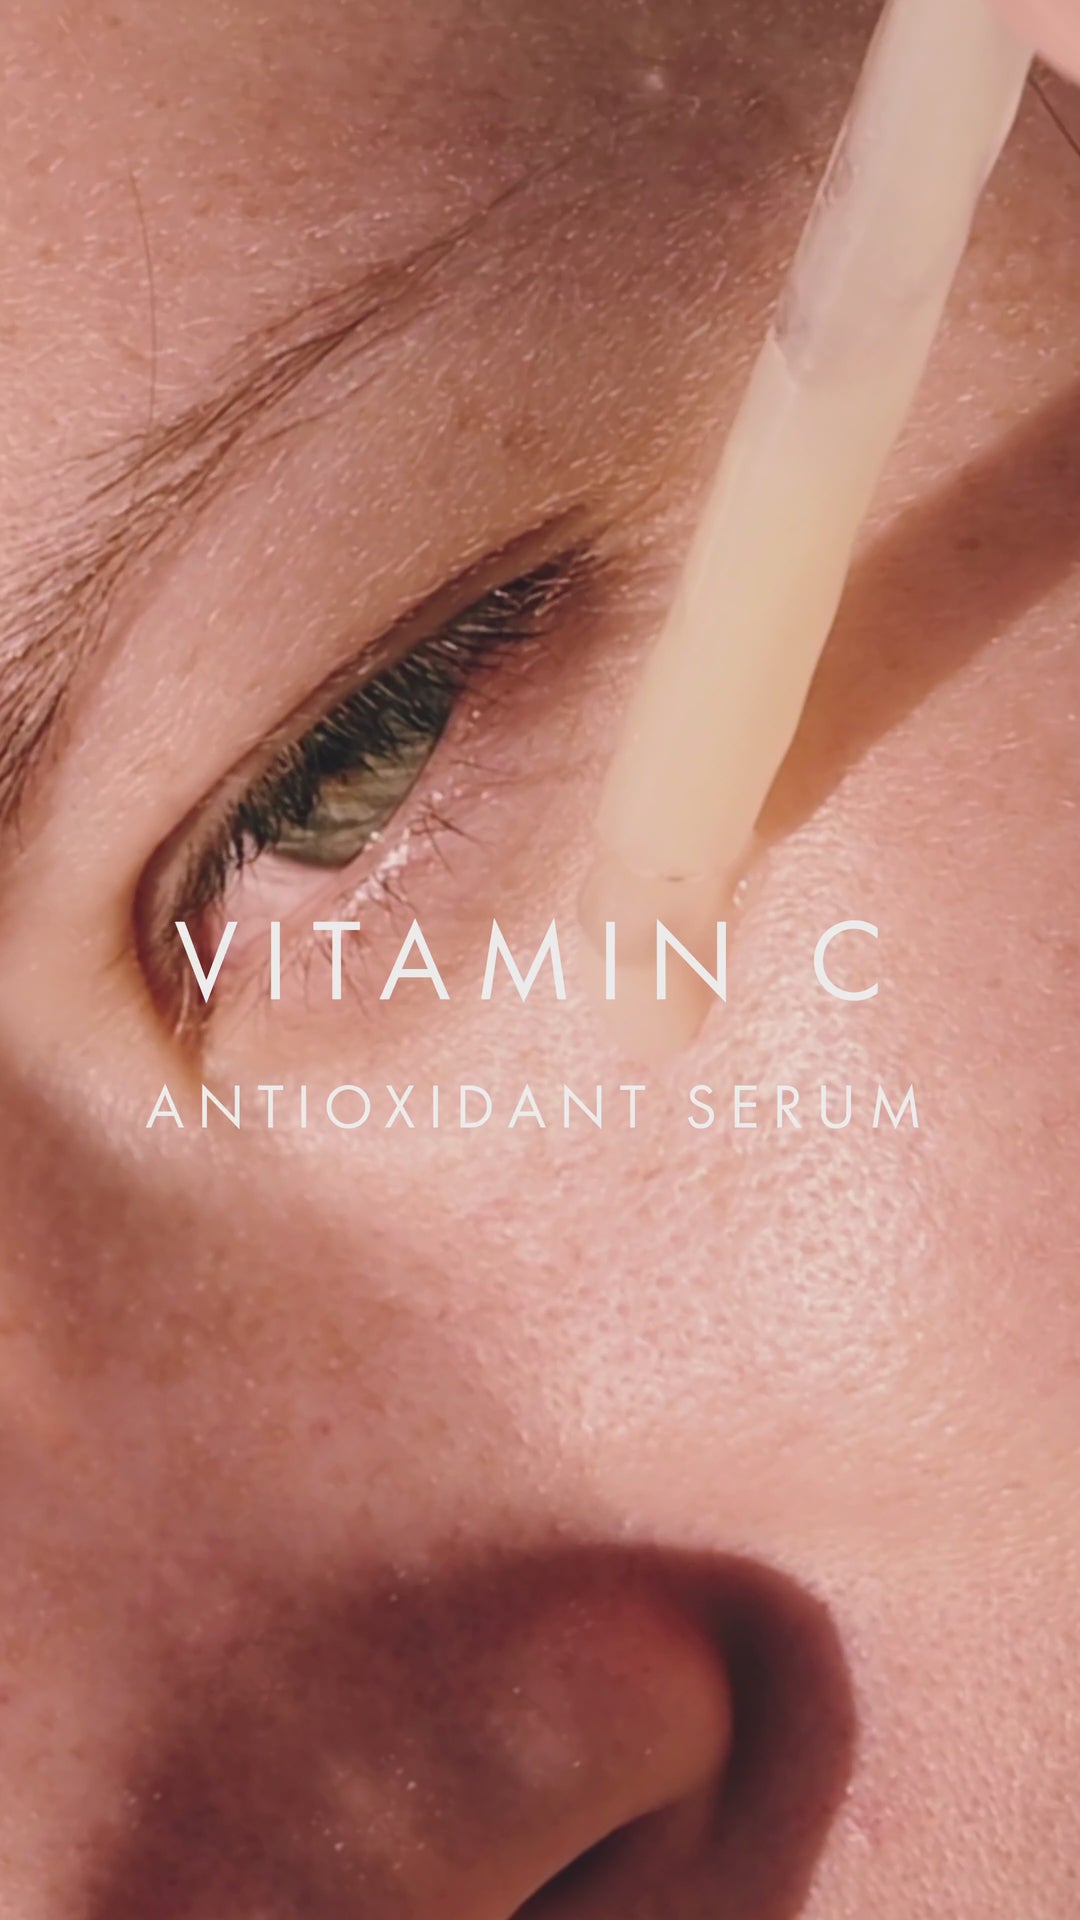 VOYA Vitamin C - Antioxidant Serum video